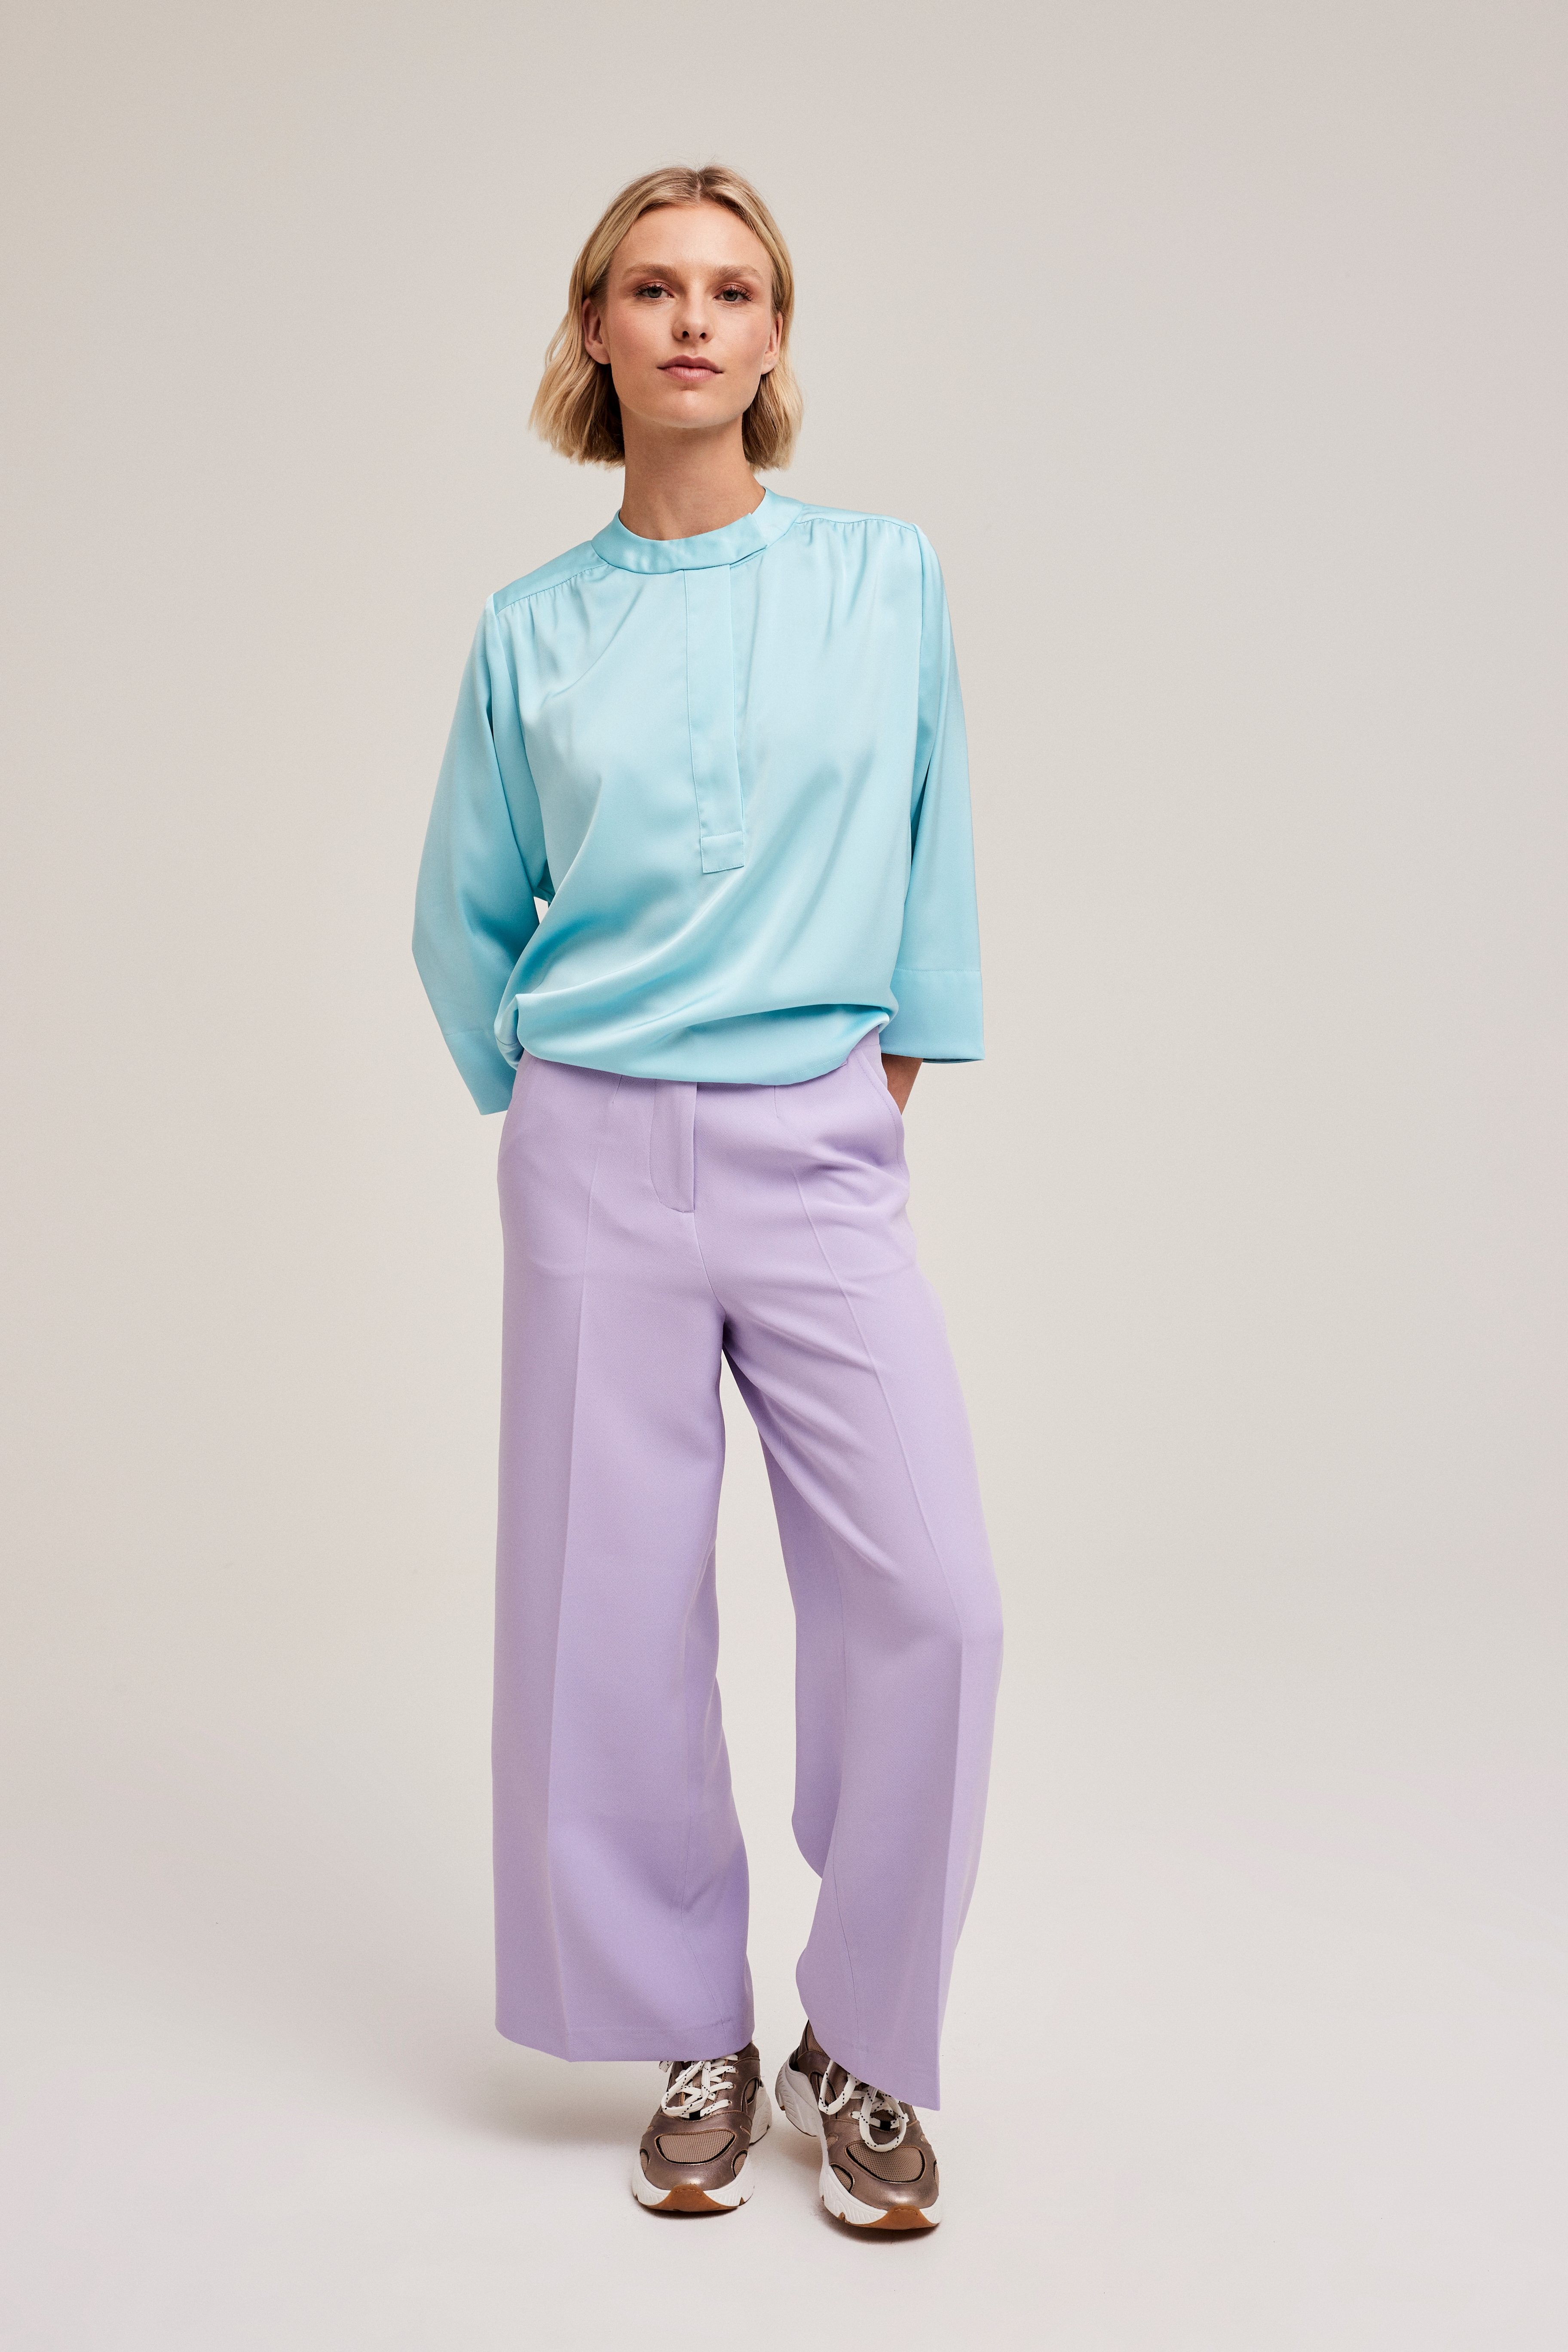 CKS Dames - LAREDO - blouse lange mouwen - lichtblauw